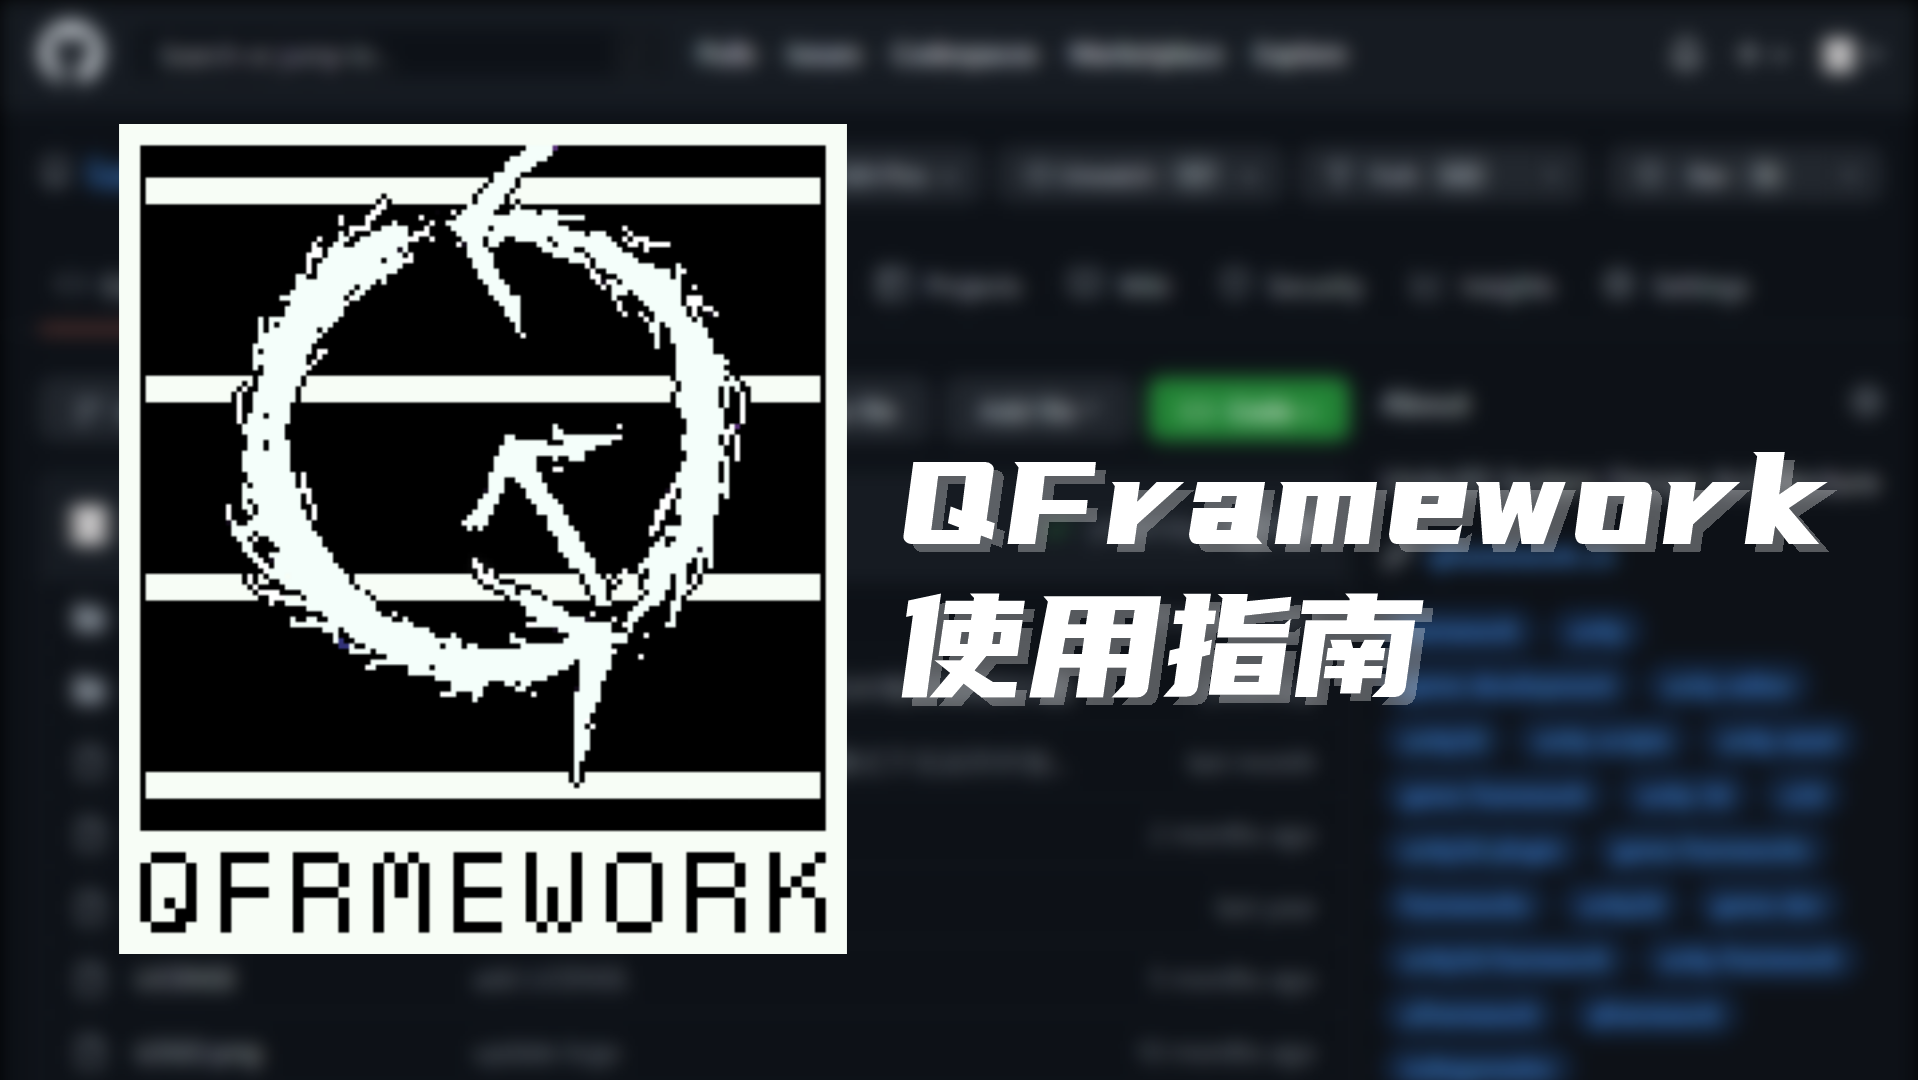 【Unity 框架】QFramework v1.0 使用指南 架构篇：08. 用接口设计模块（依赖倒置原则）| Unity 游戏框架 | Unity 游戏开发 | Unity 独立游戏 